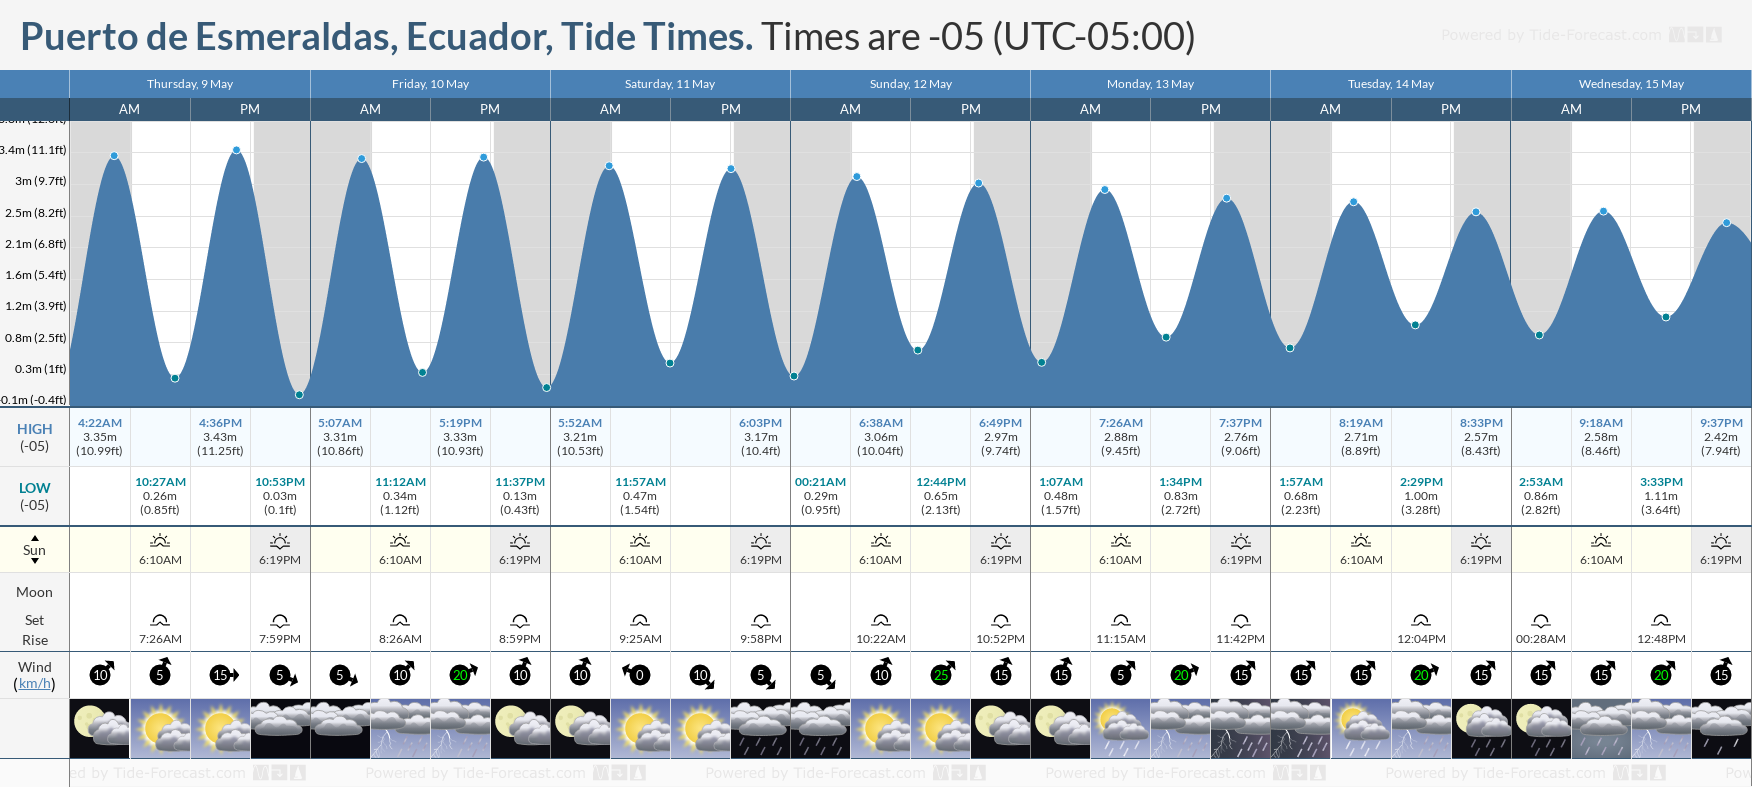 Puerto de Esmeraldas, Ecuador Tide Chart including high and low tide tide times for the next 7 days